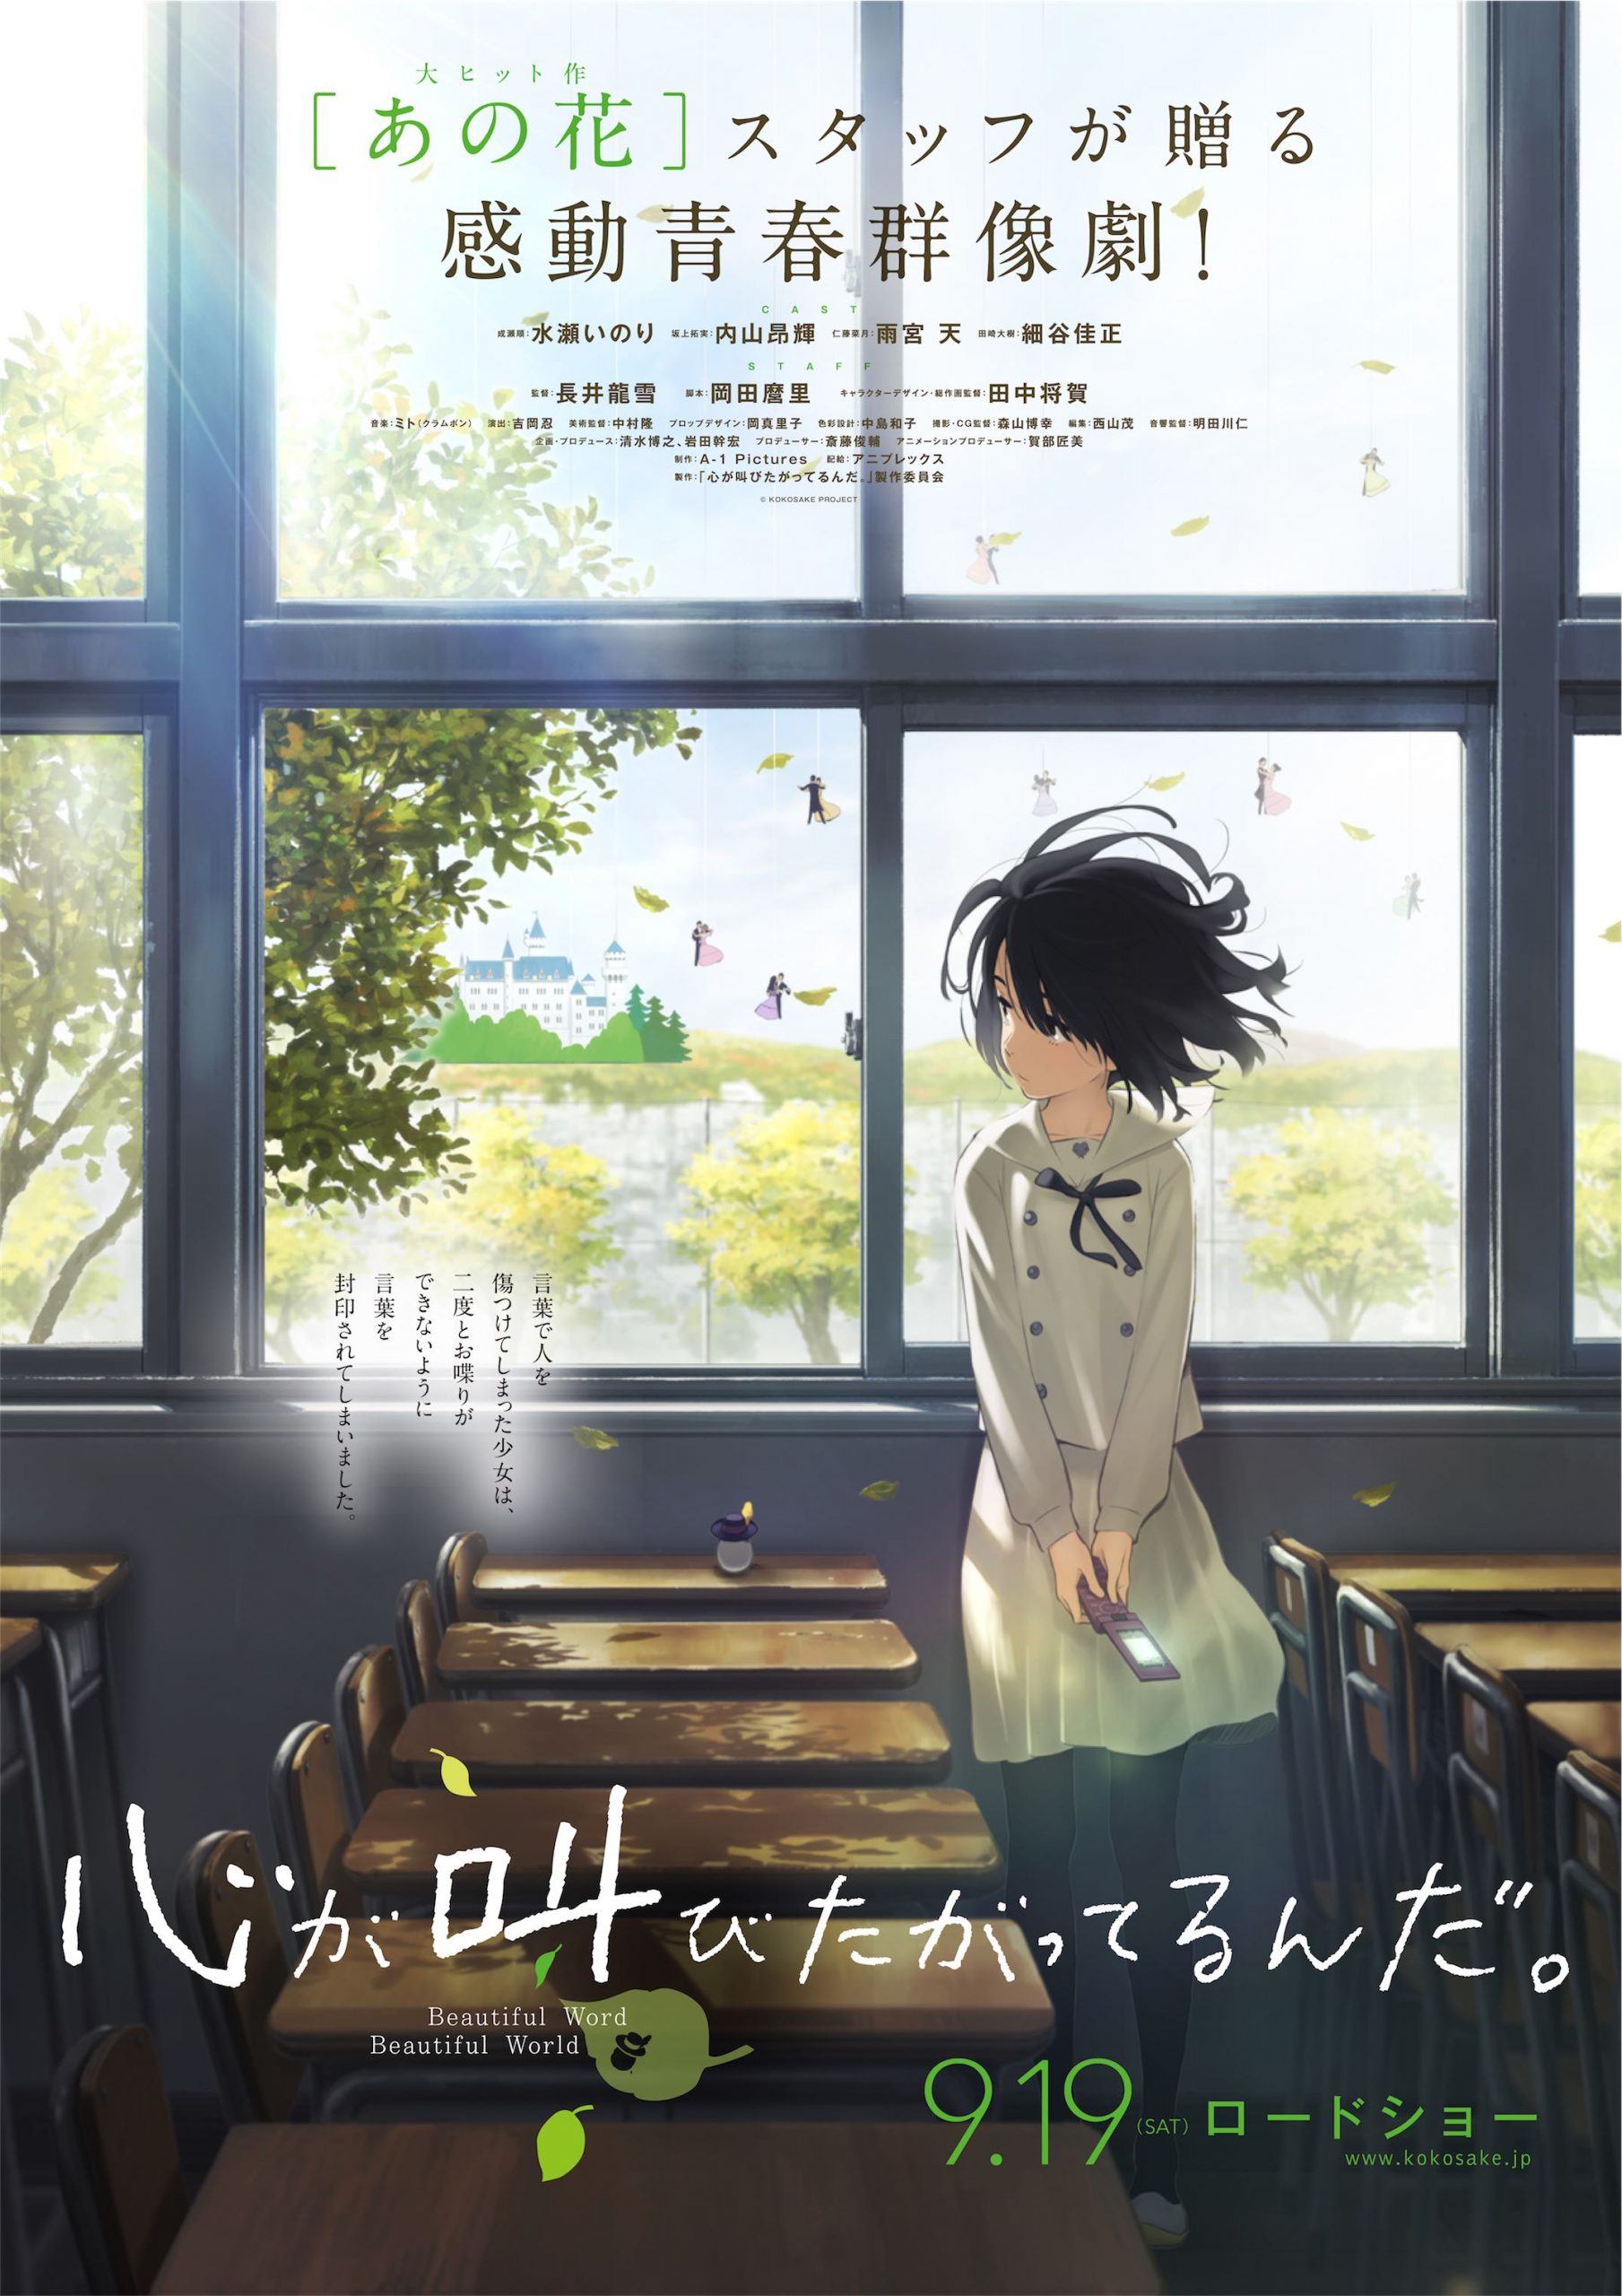 Kakegurui Complete Anime Season 1 & 2 Episode 1 - 24 + Movie DVD  English Dubbed | eBay